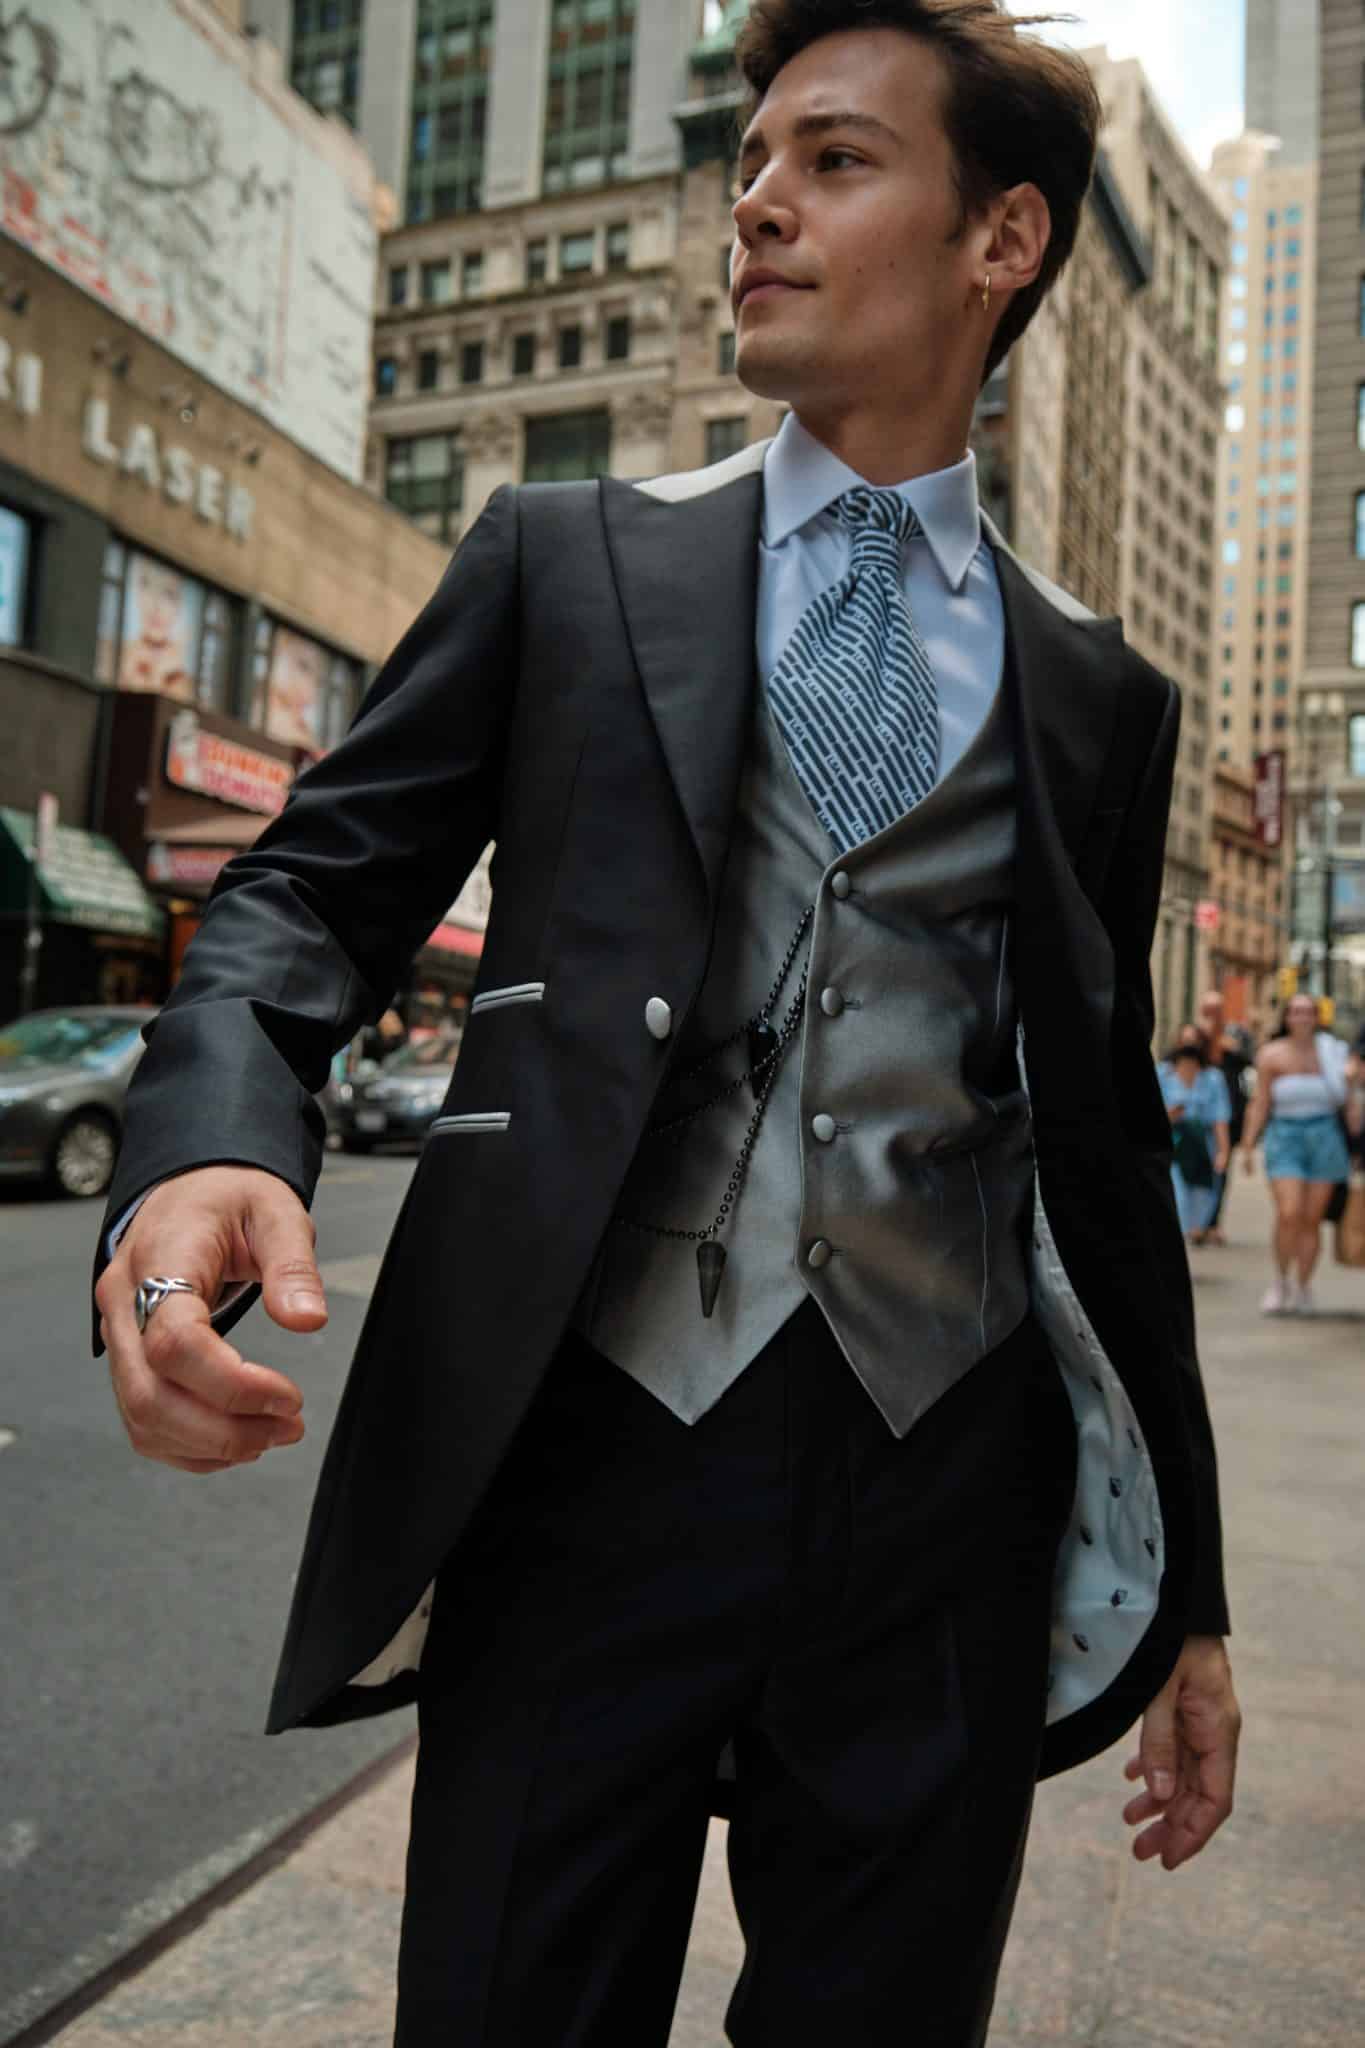 Gentleman models Central Florida's Leonardo 5th Avenue modern black suit with wide lapels and vest